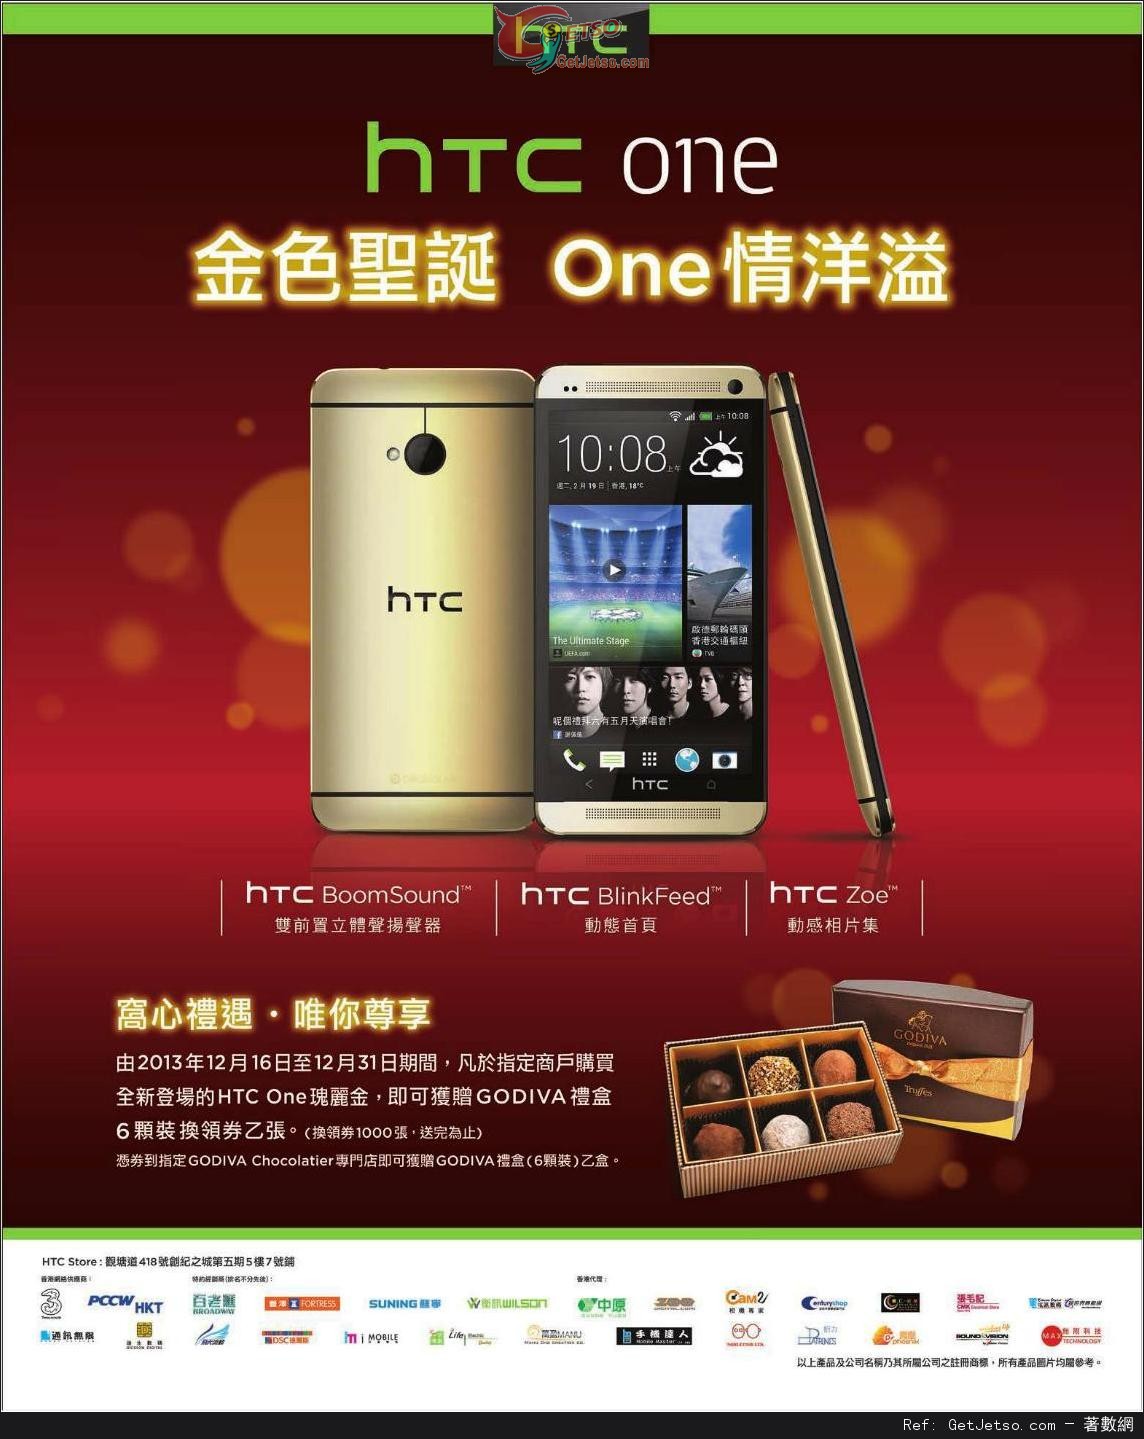 HTC 購買指定手機送GODIVA 禮盒優惠(至13年12月31日)圖片1